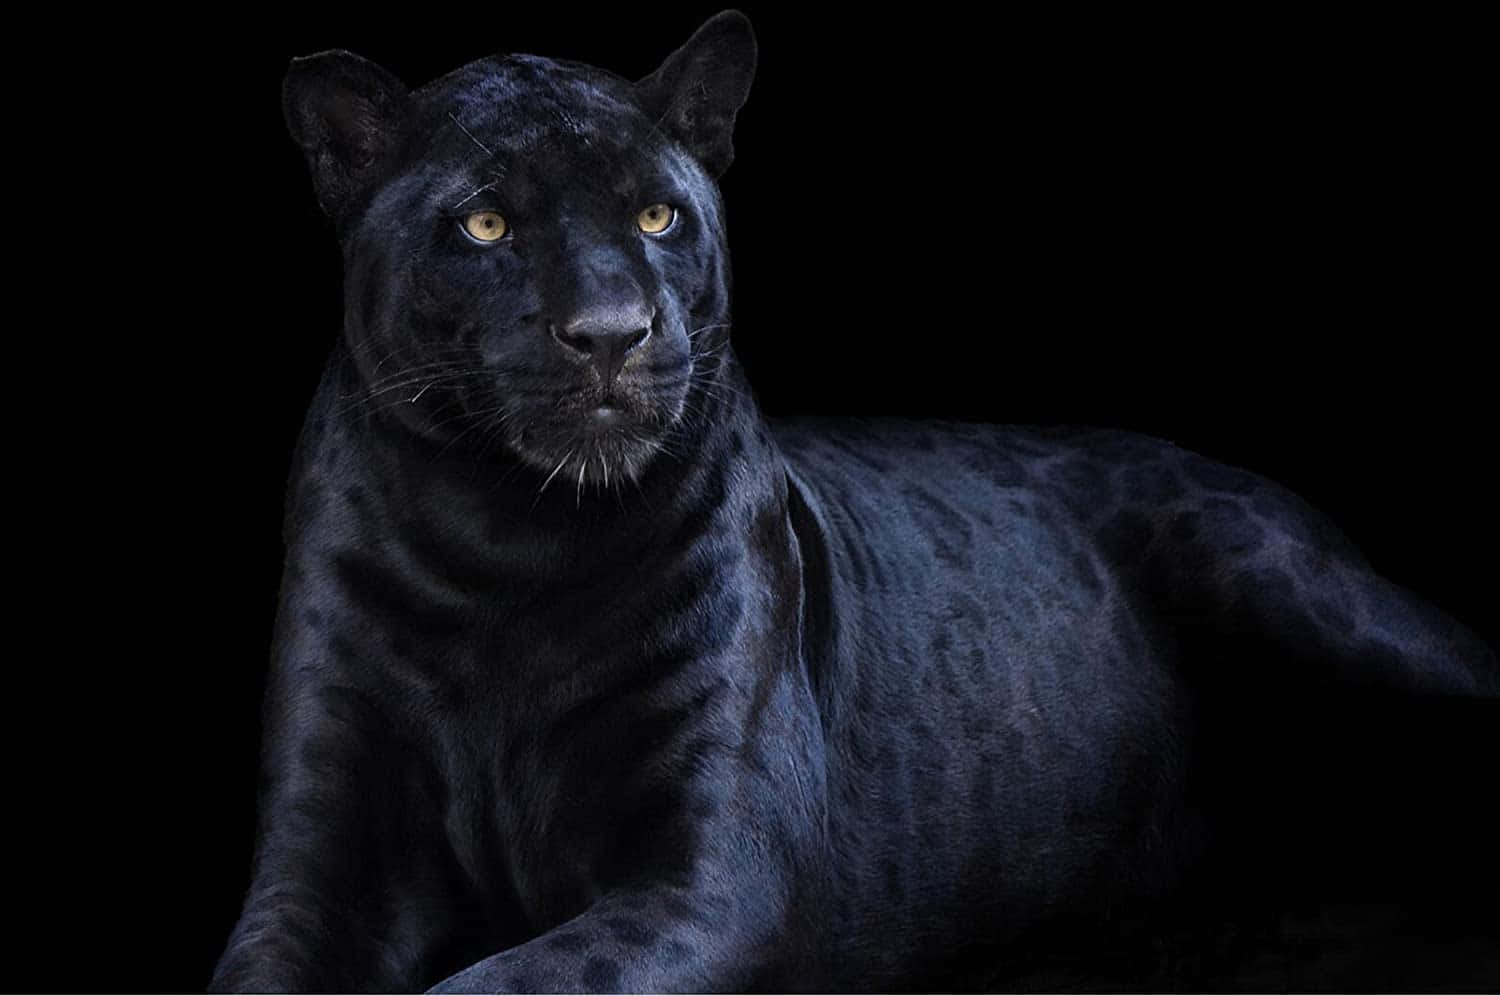 A Black Leopard Is Sitting In The Dark